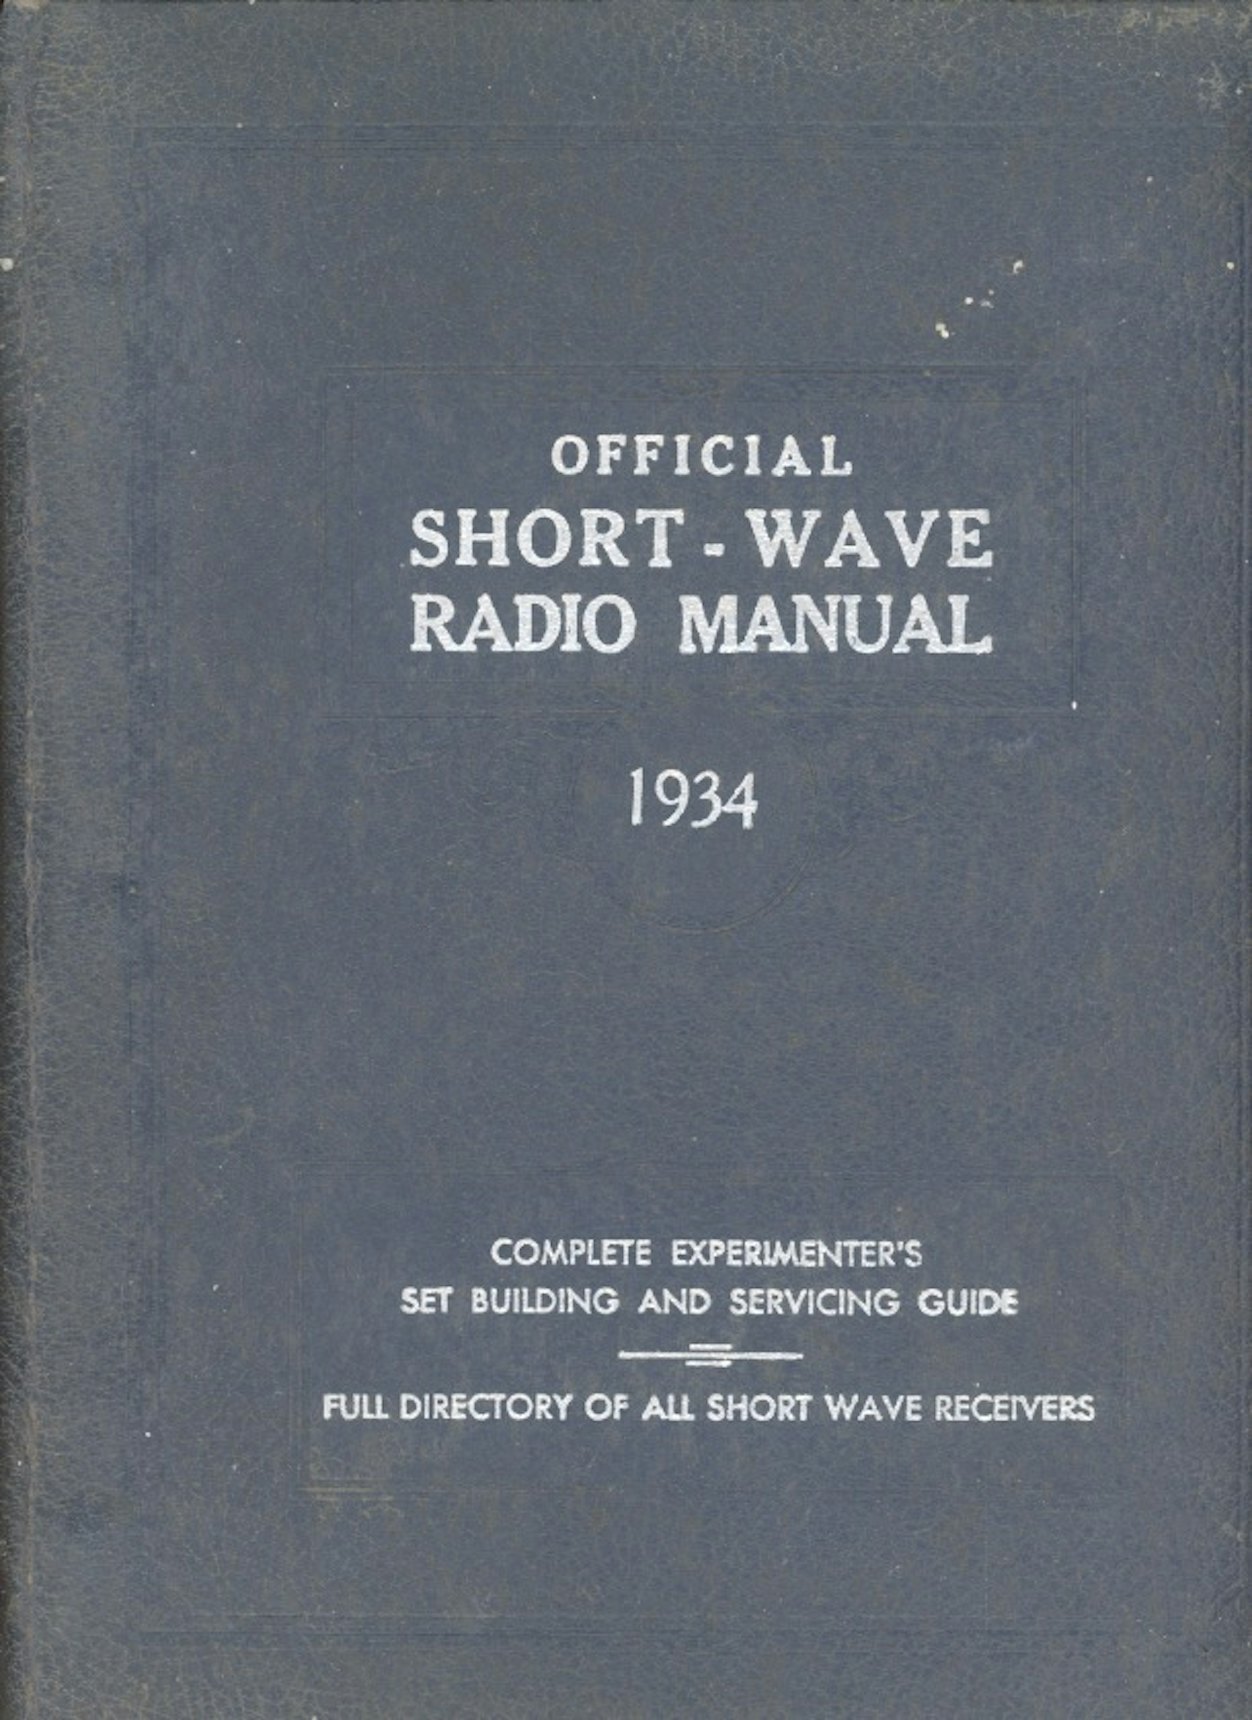 Official Short-Wave Radio Manual 1934